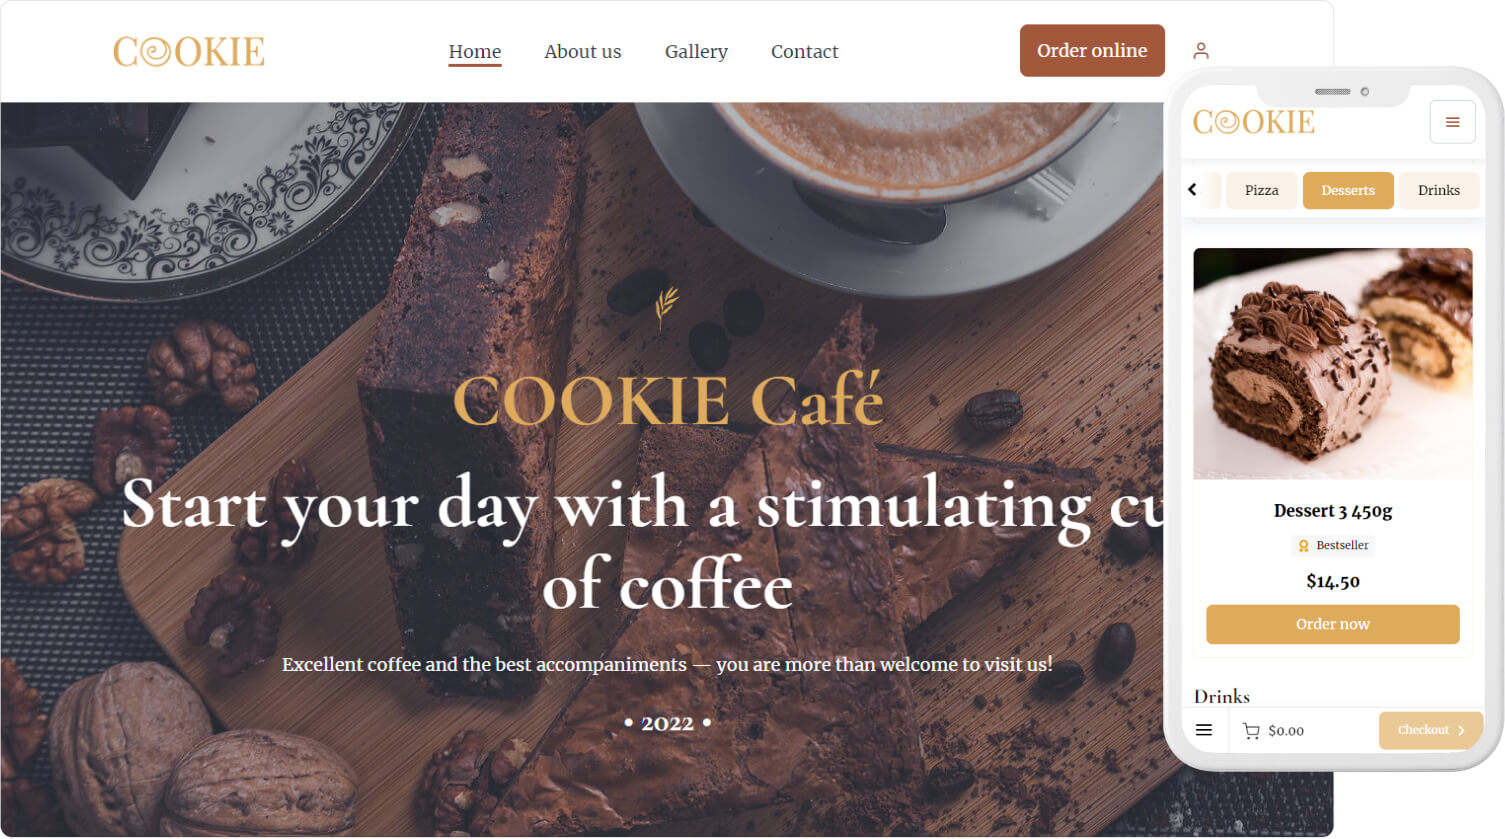 Cookie store website template